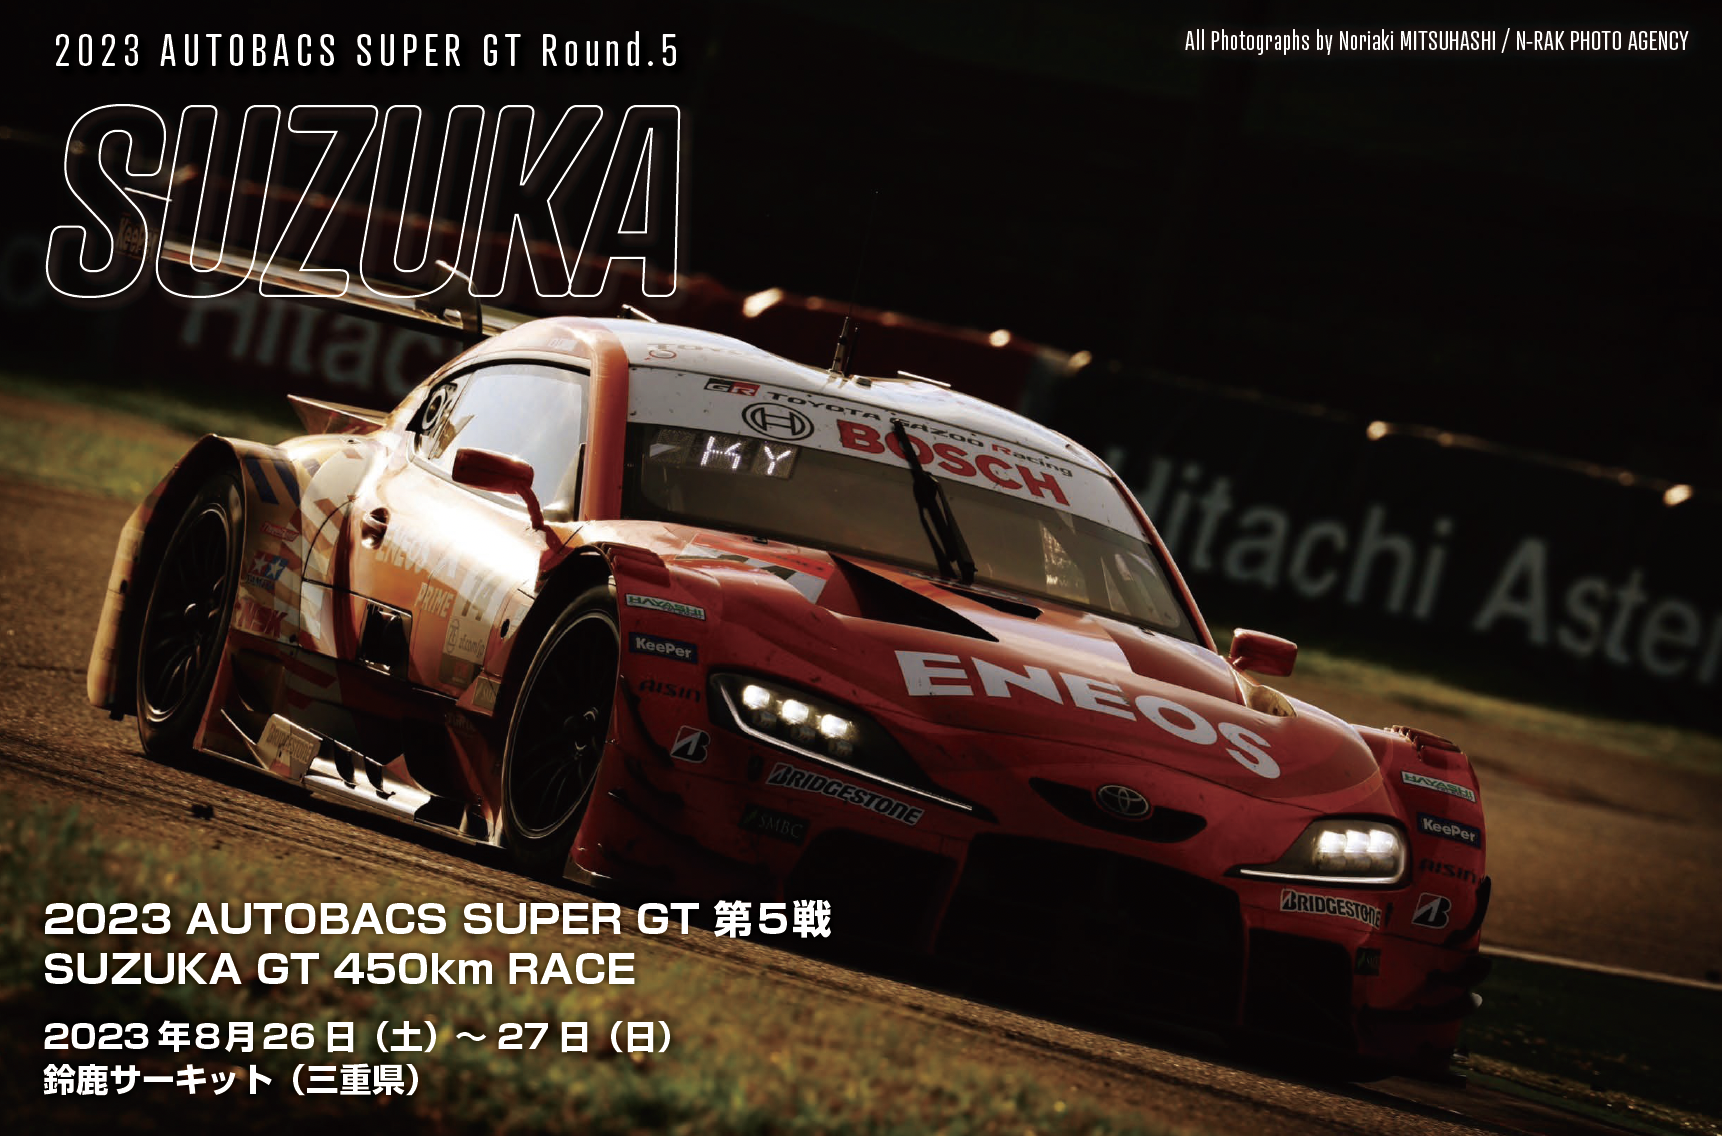 2023 AUTOBACS SUPER GT Round.5 SUZUKA GT 450km RACE